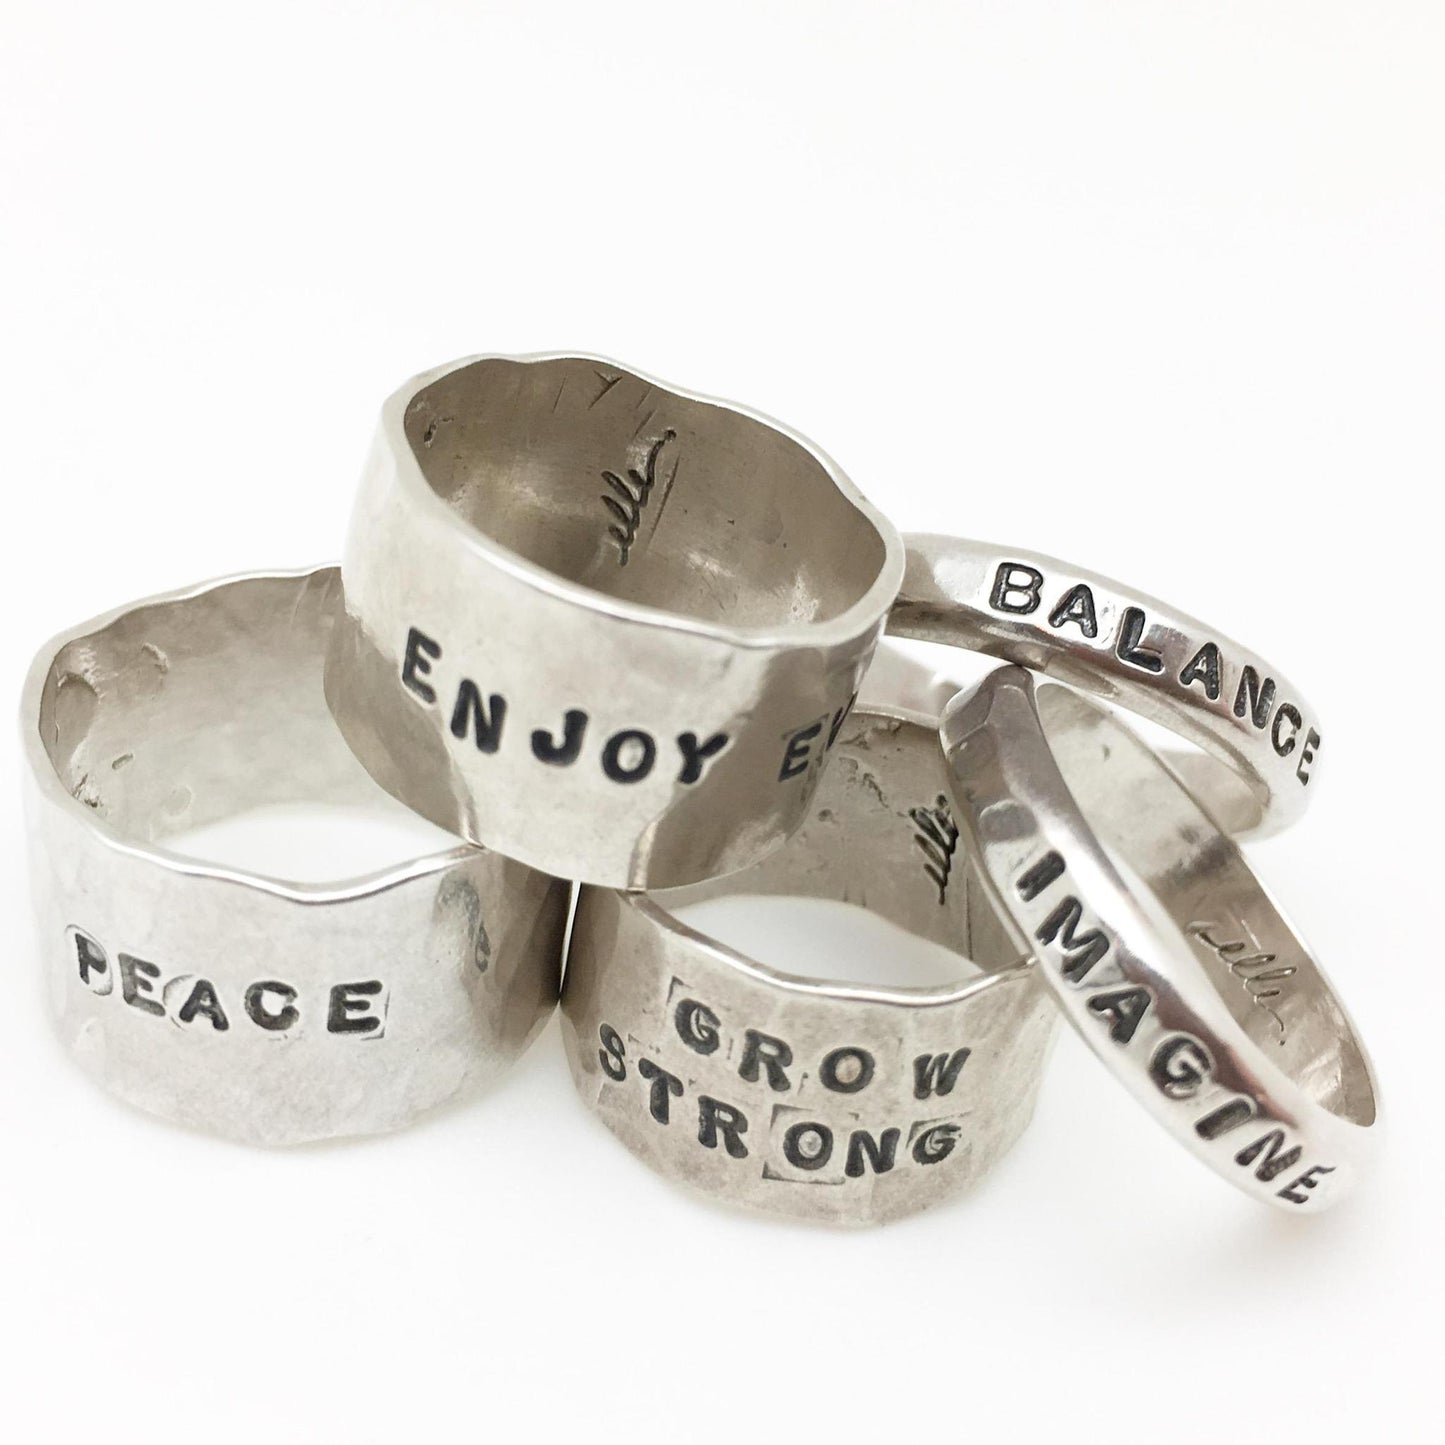 Custom Rings in Sterling - Handmade - with Words or Plain